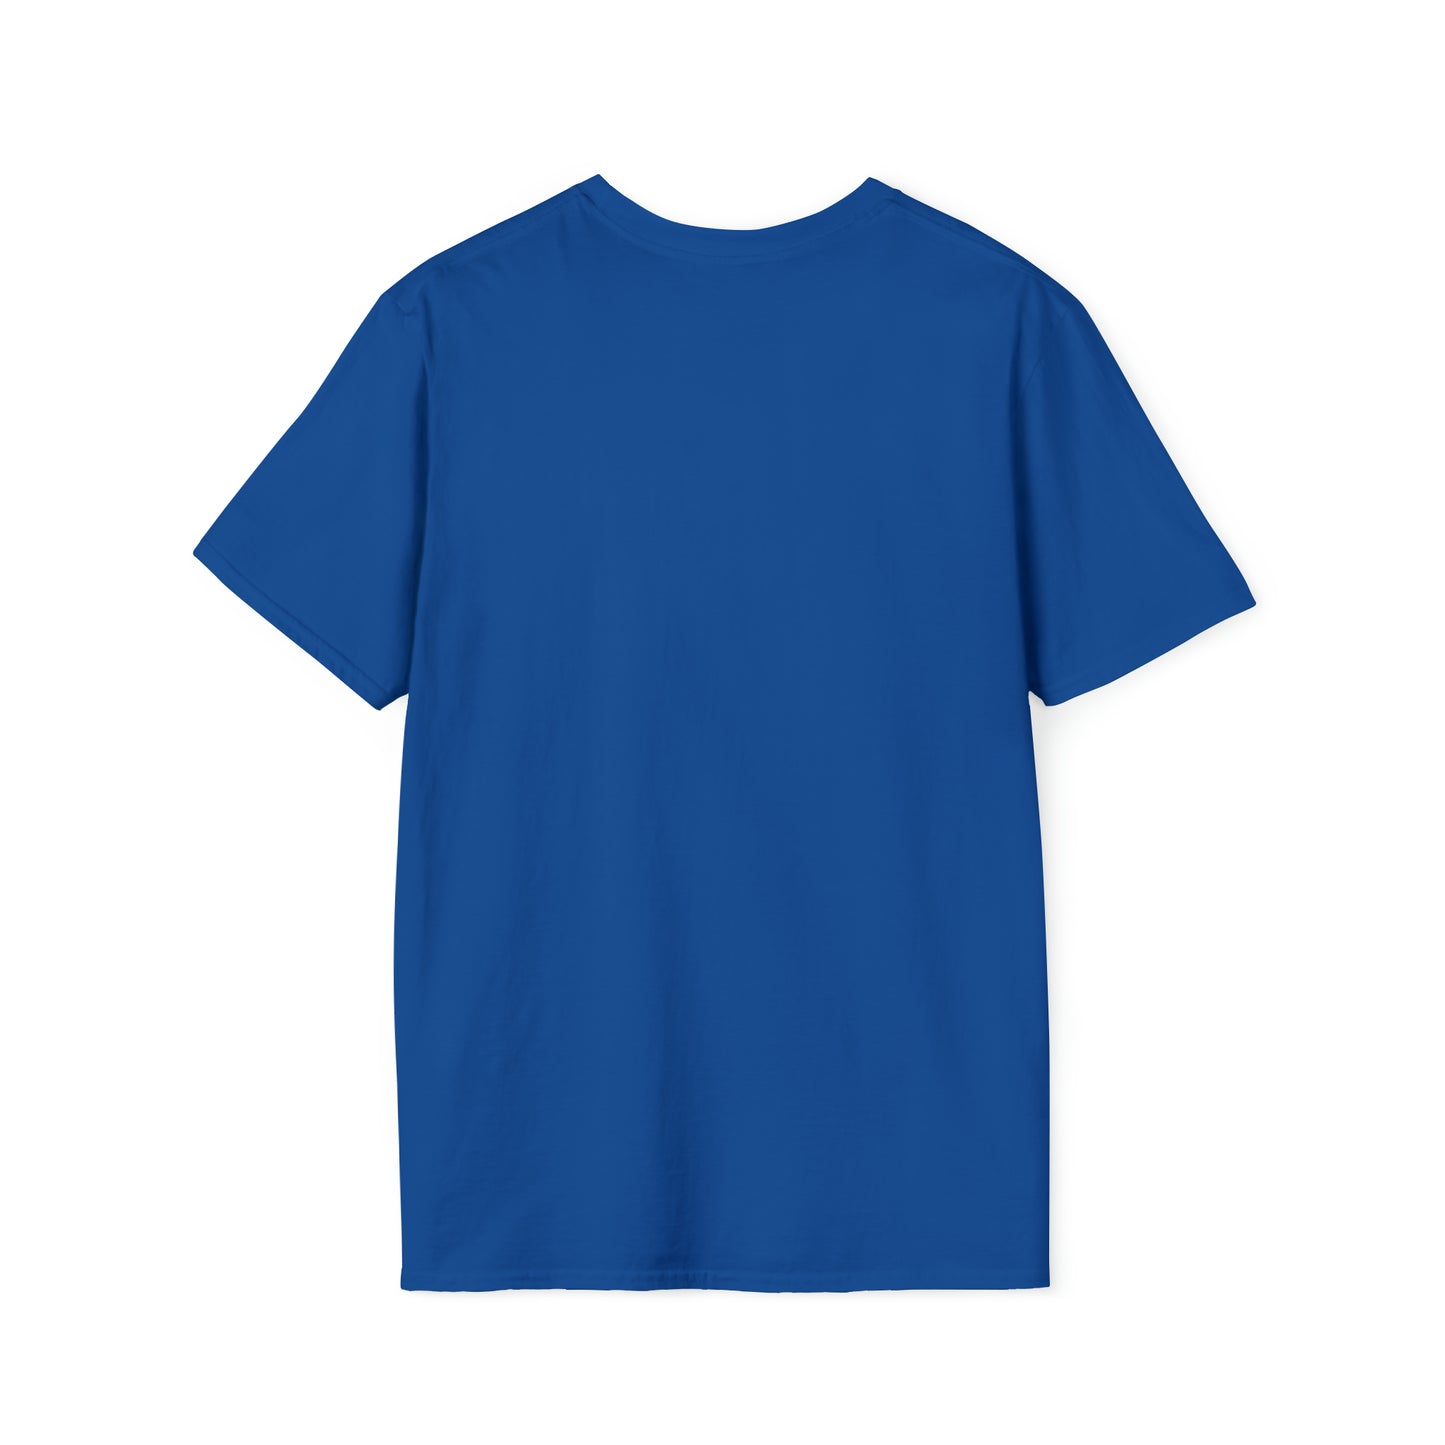 Messimporta Unisex Softstyle T-Shirt